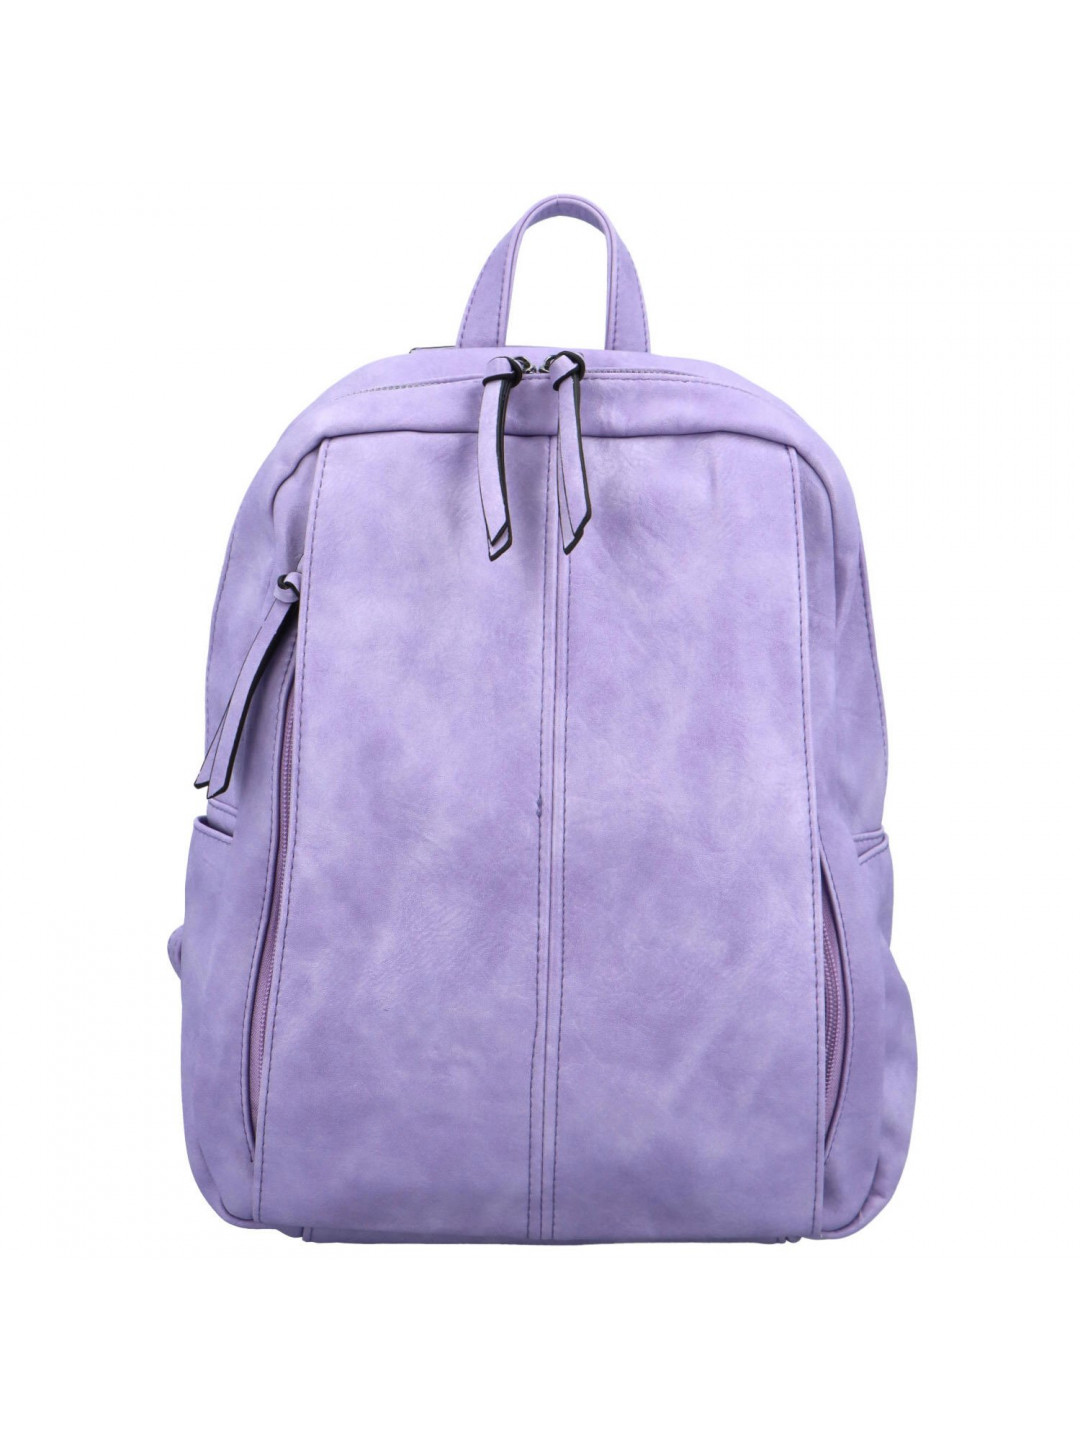 Stylový dámský koženkový kabelko batoh Cedra fialová